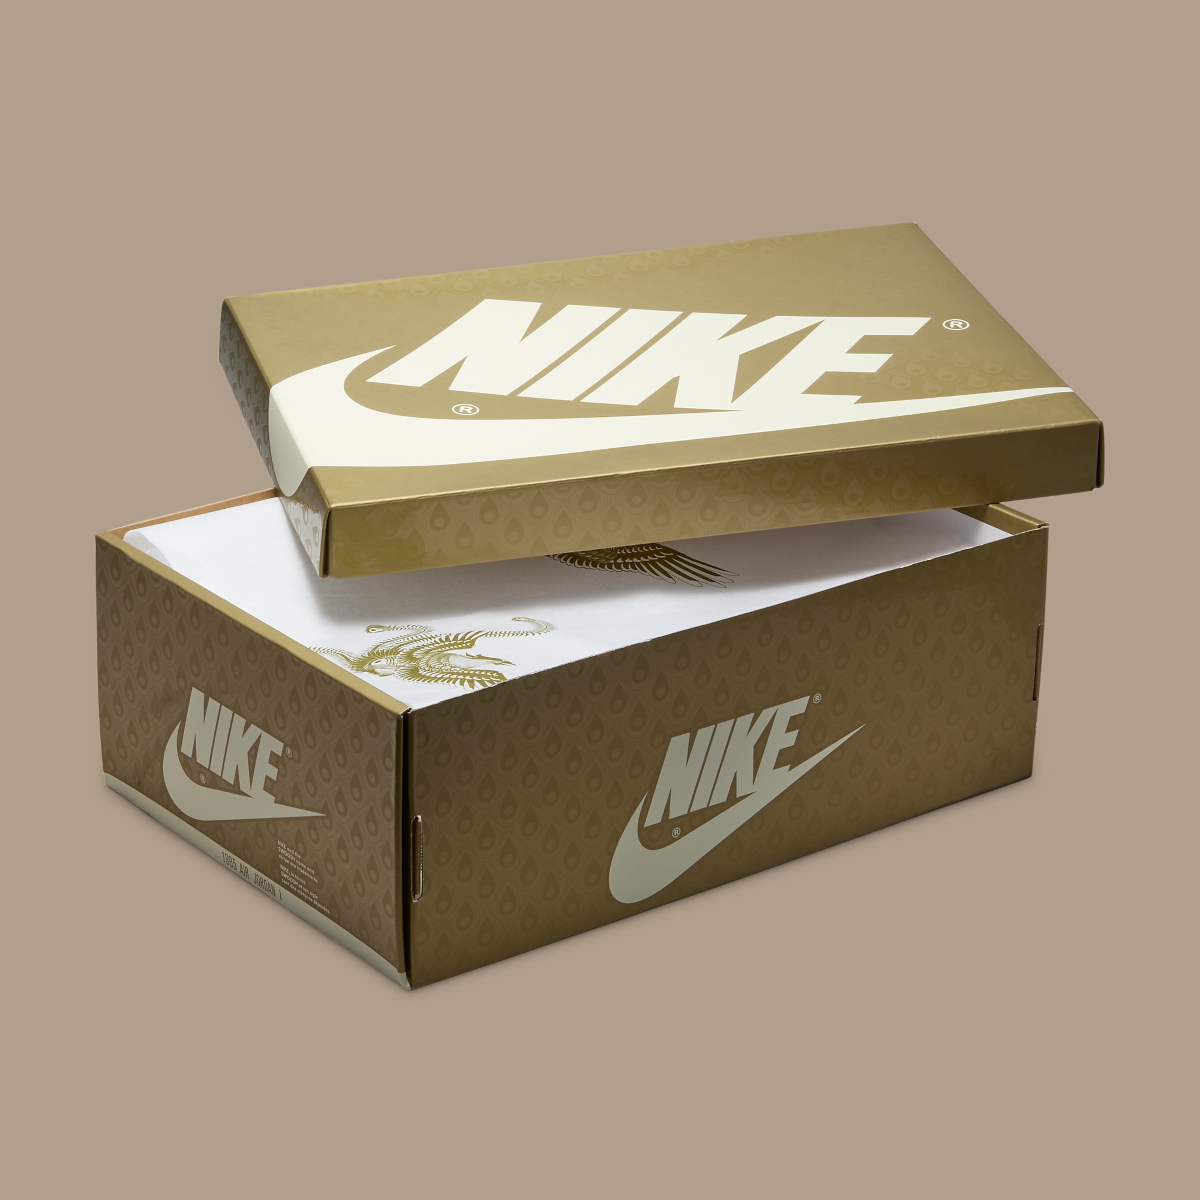 Nike Air Playoff Jordan has 1 Low Reverse Bred tatarischen Swoosh 2020 UK Größe 10.5